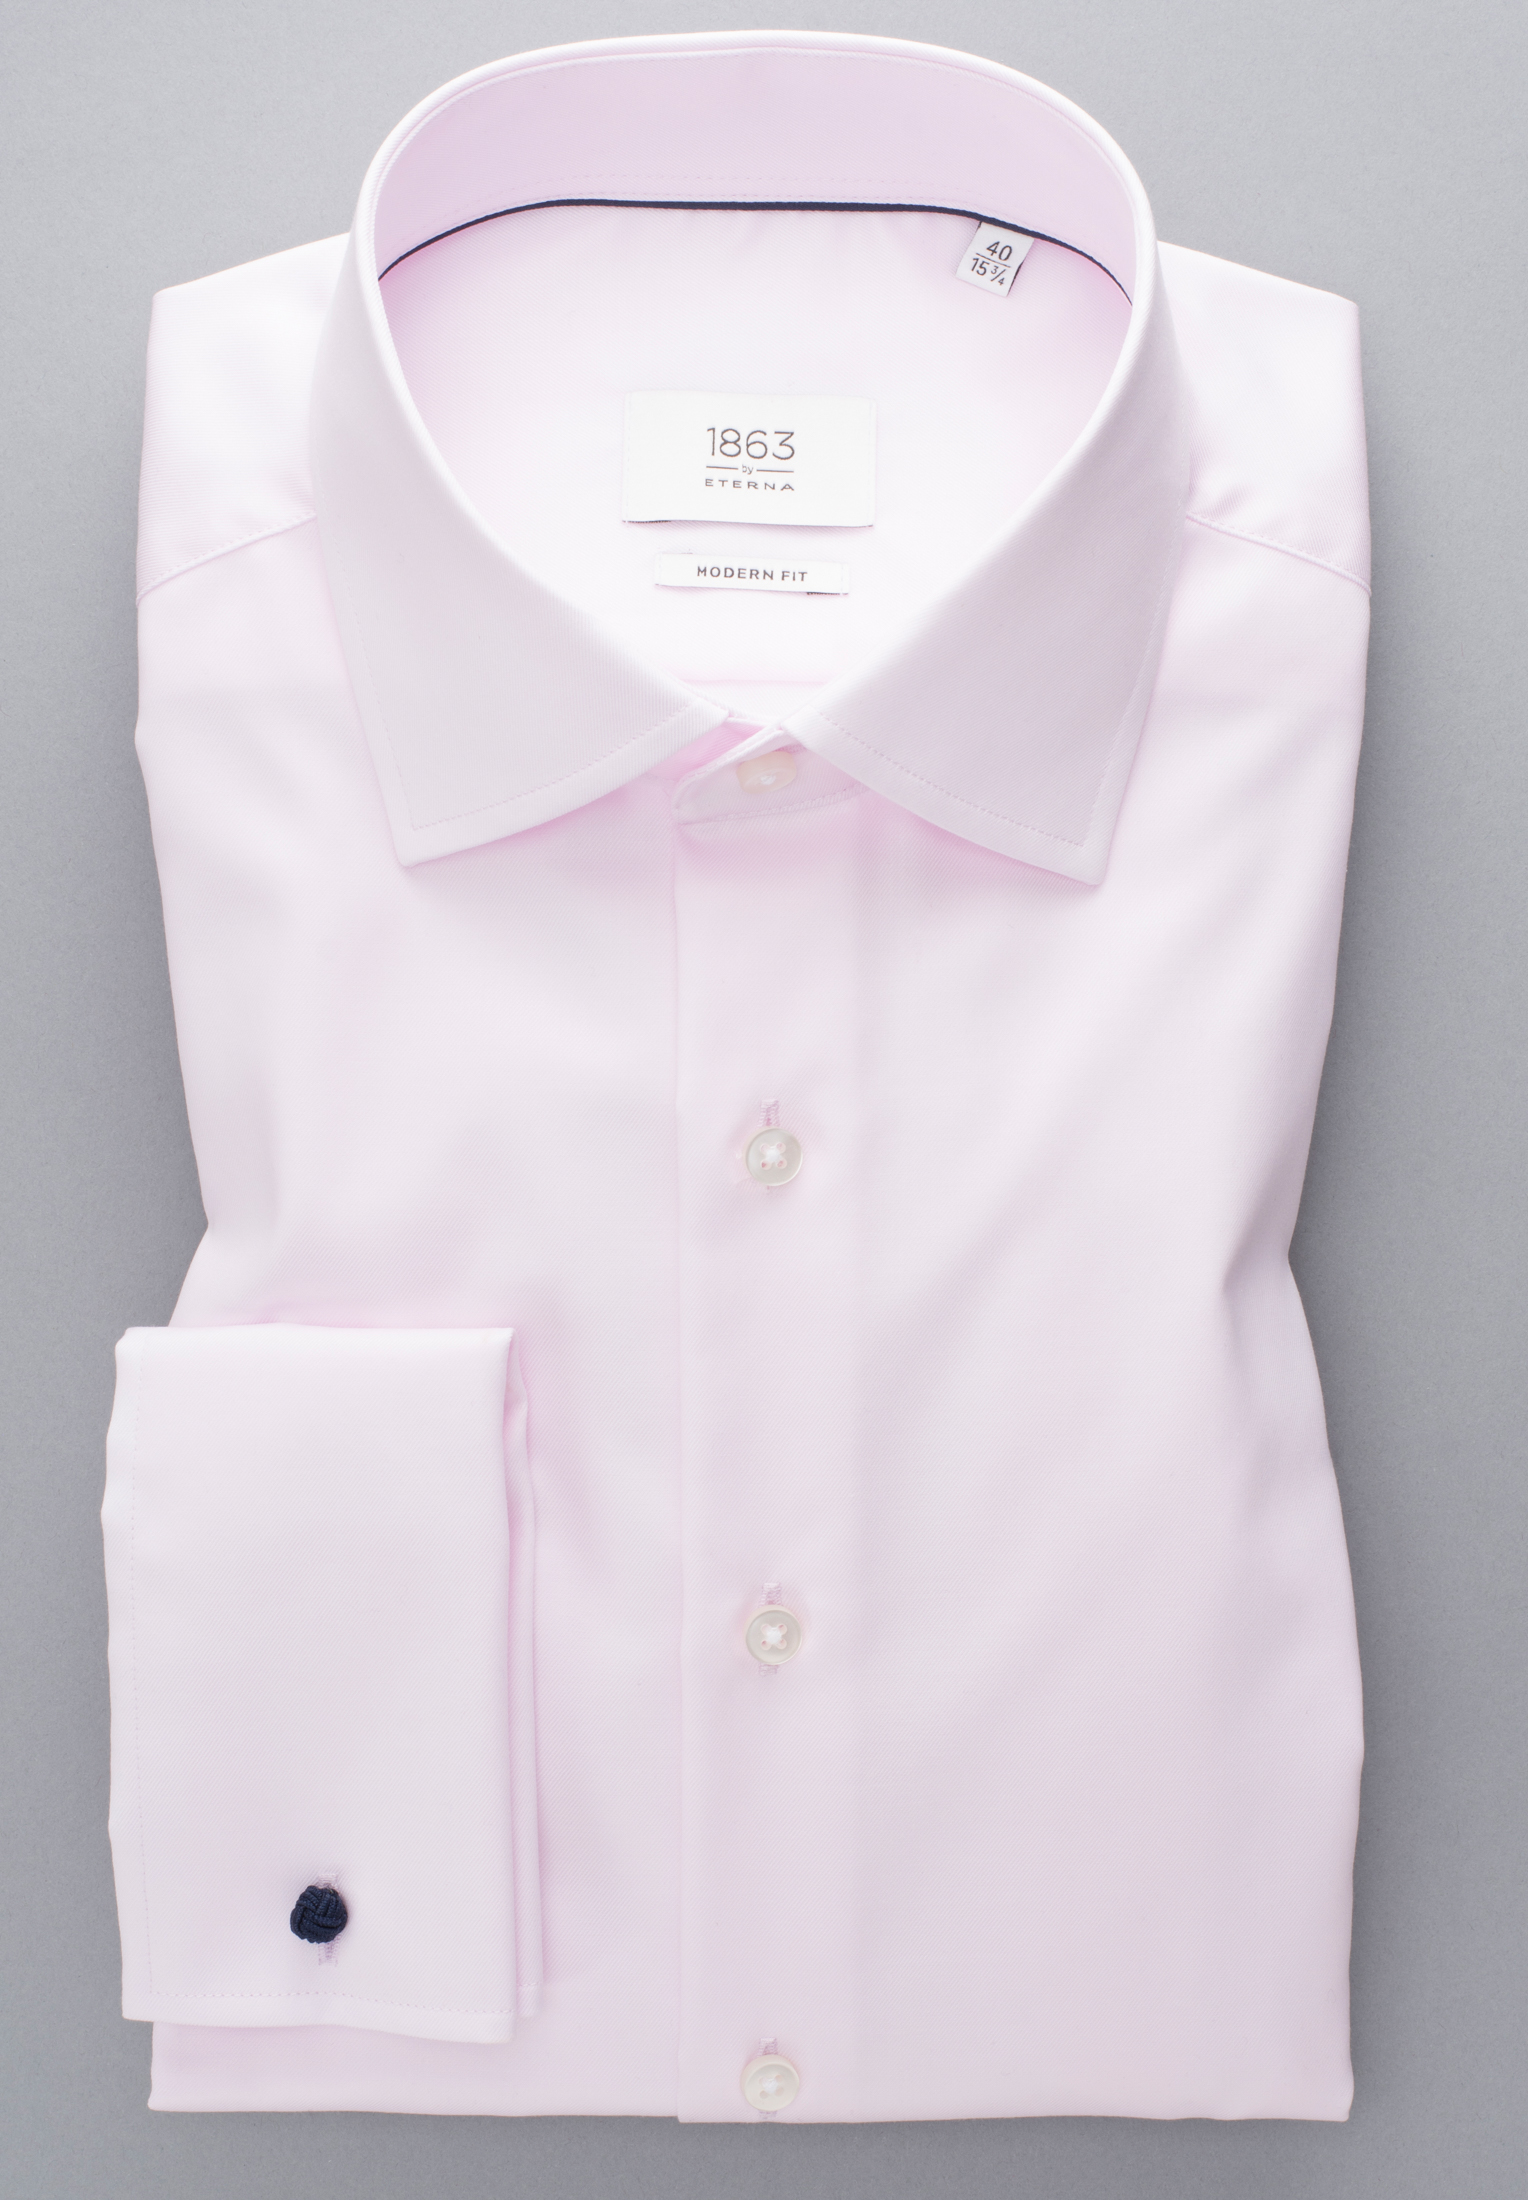 sleeve | rose rose | in Shirt 46 1SH12094-15-11-46-1/1 | | Luxury MODERN plain long FIT